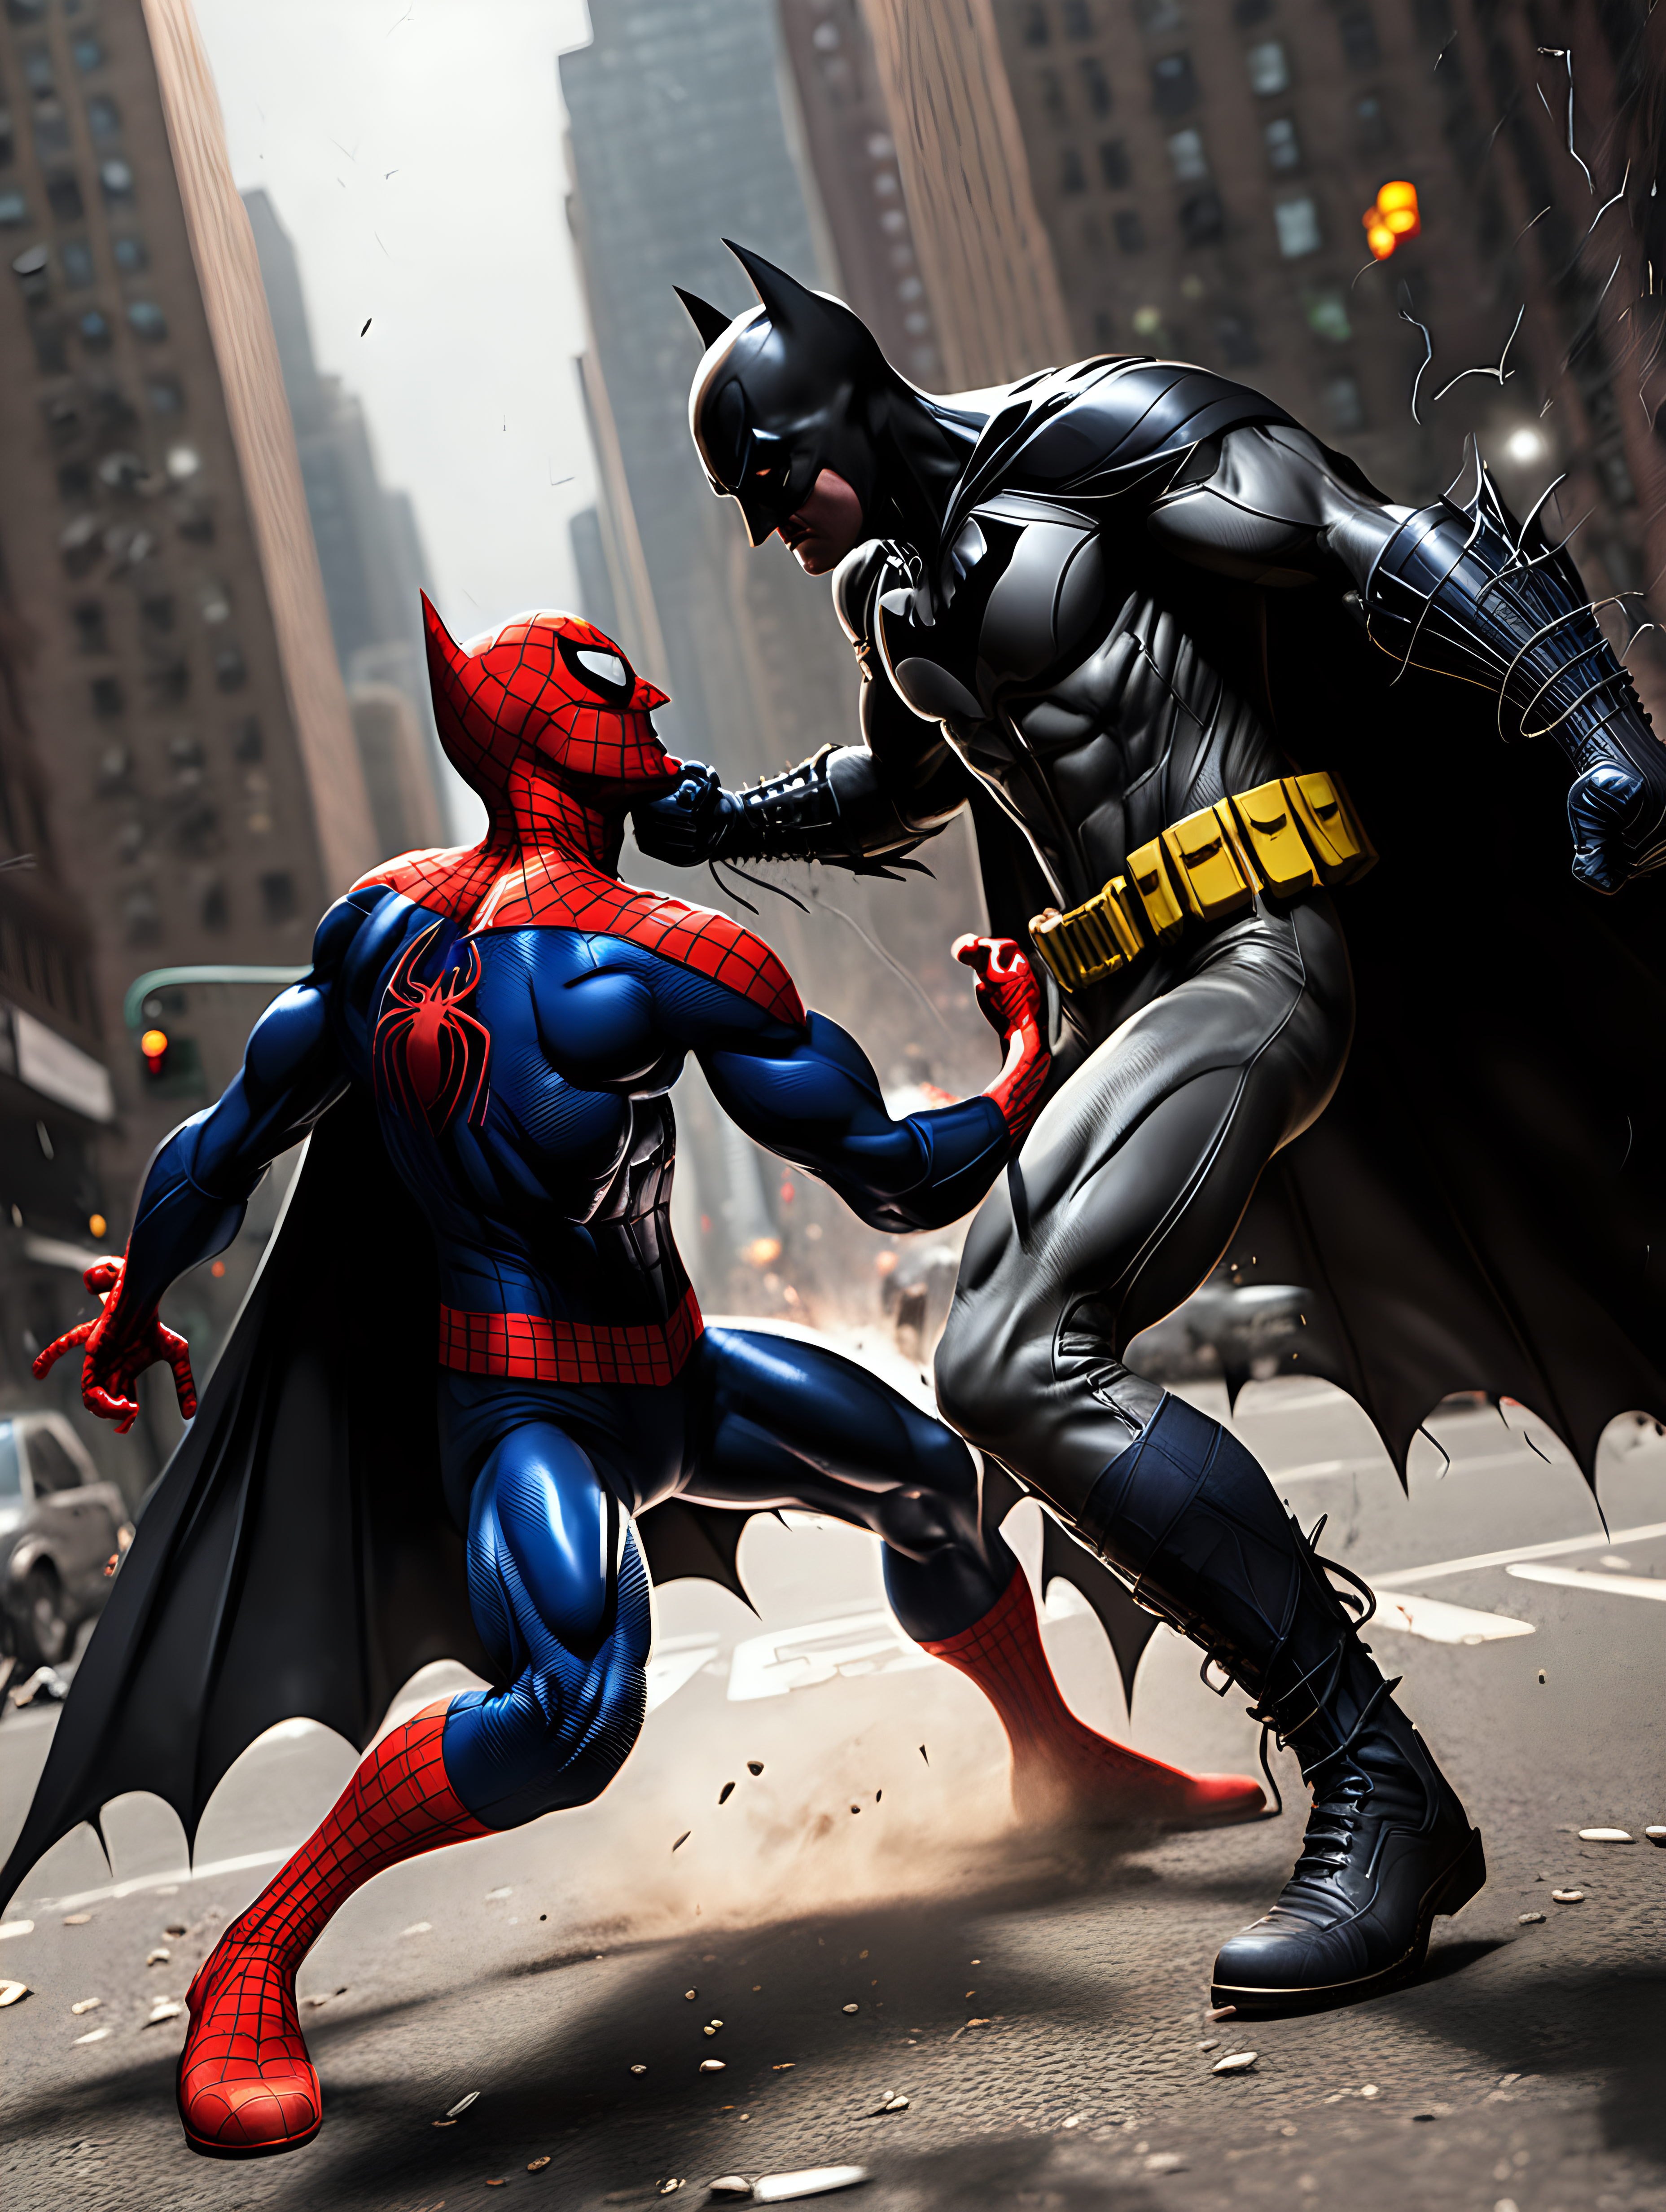 The Batman fighting the Spiderman